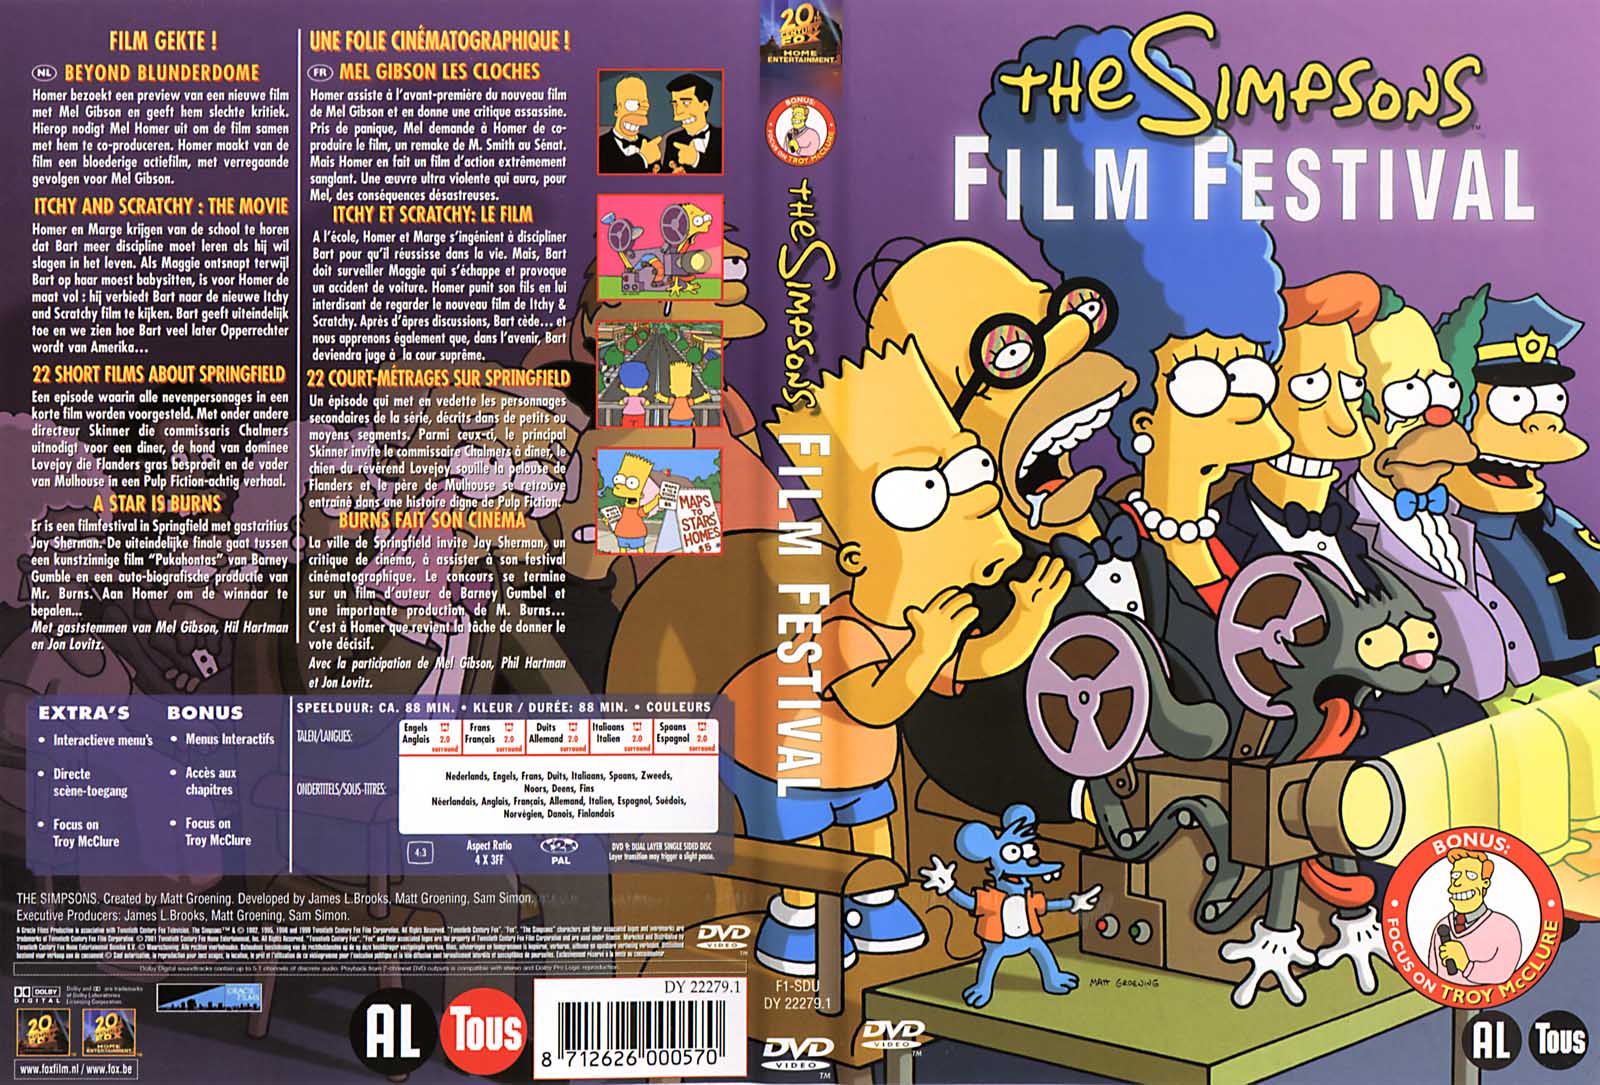 The Simpsons film festival